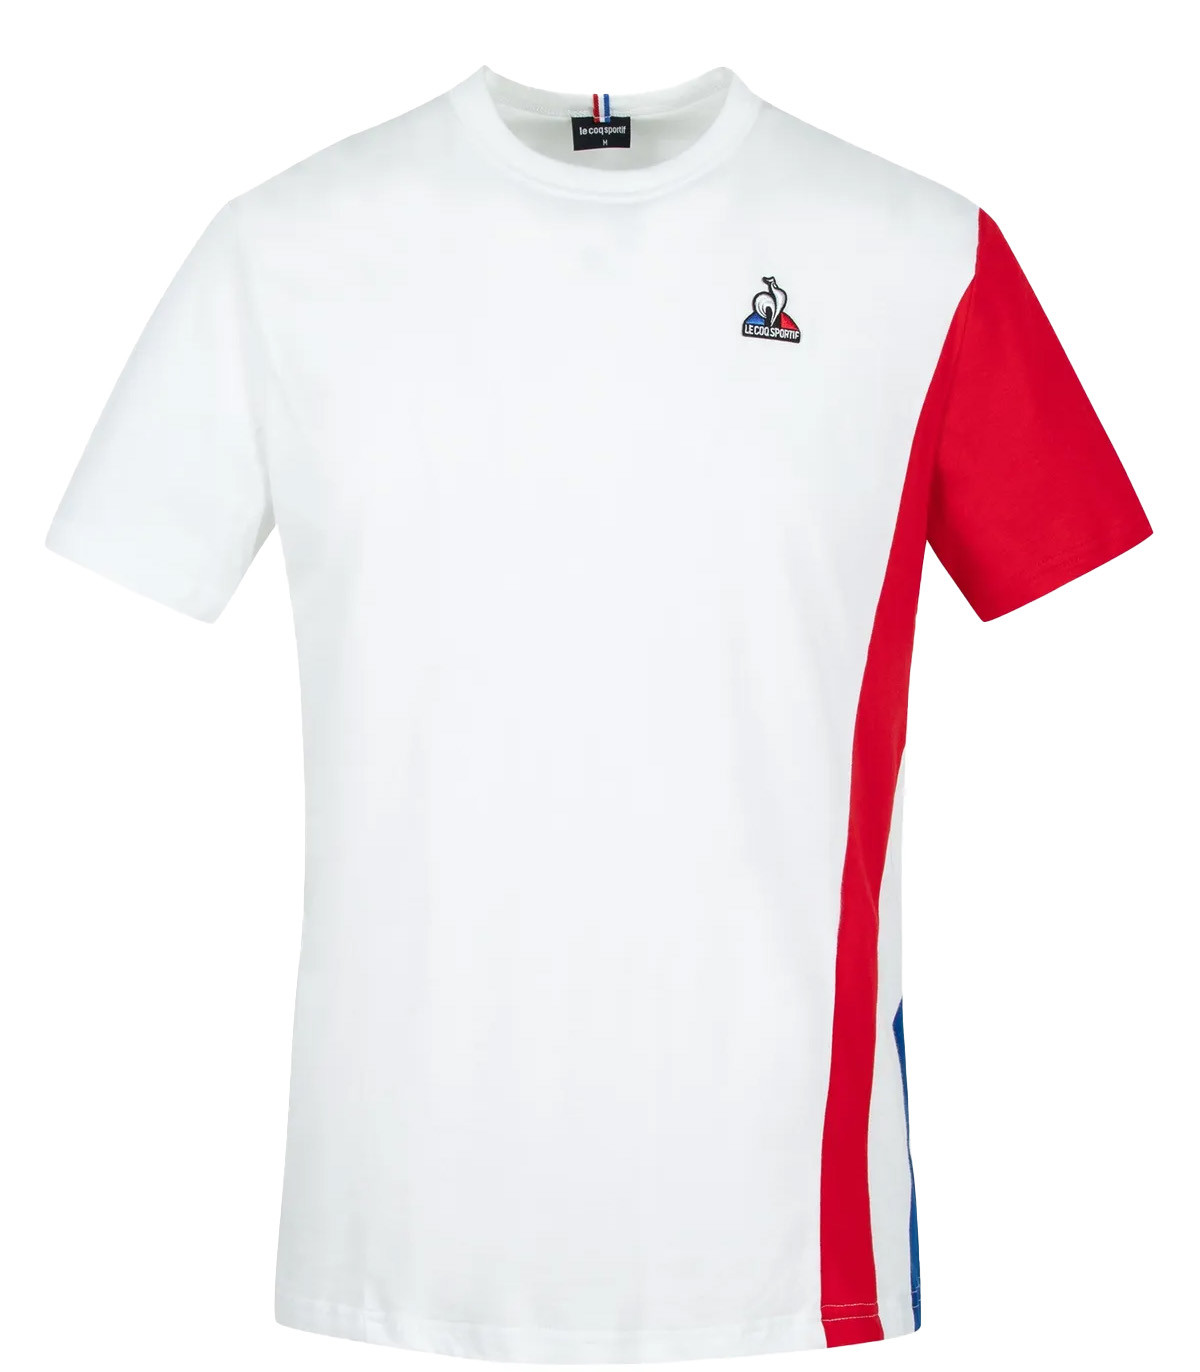 Le Coq Sportif - Camiseta Tri Tee Ss - Blanco